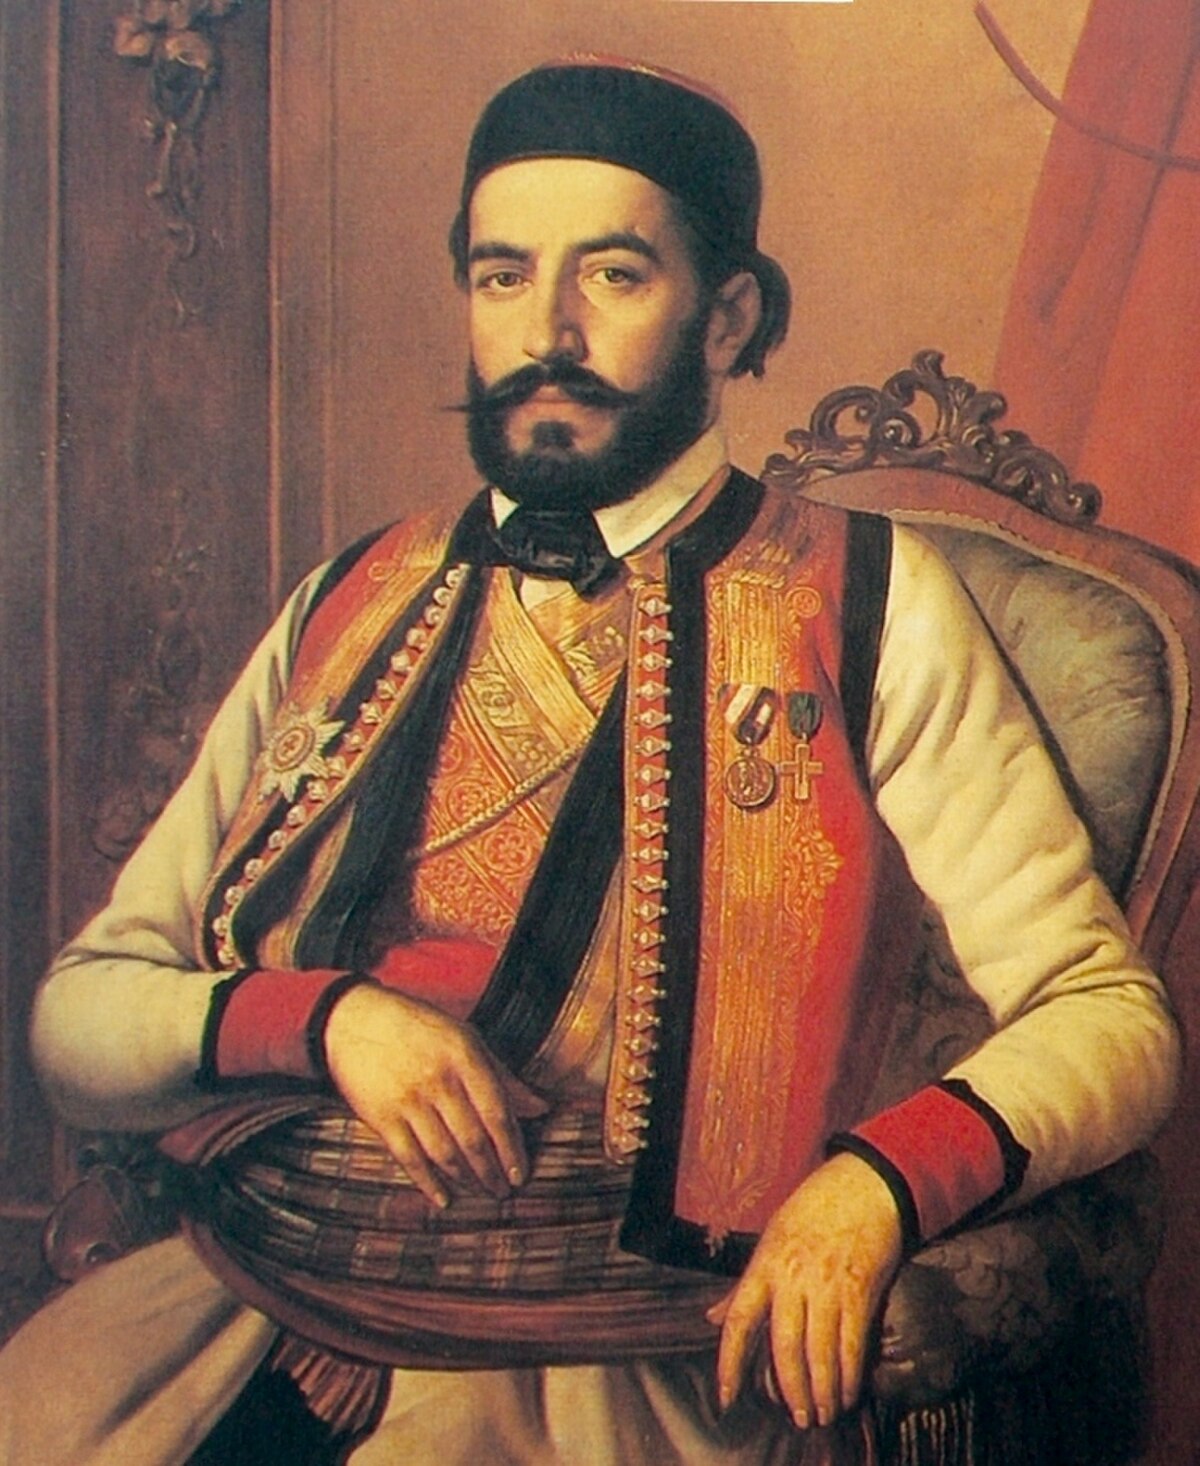 Petar II Petrovich-Njegosh